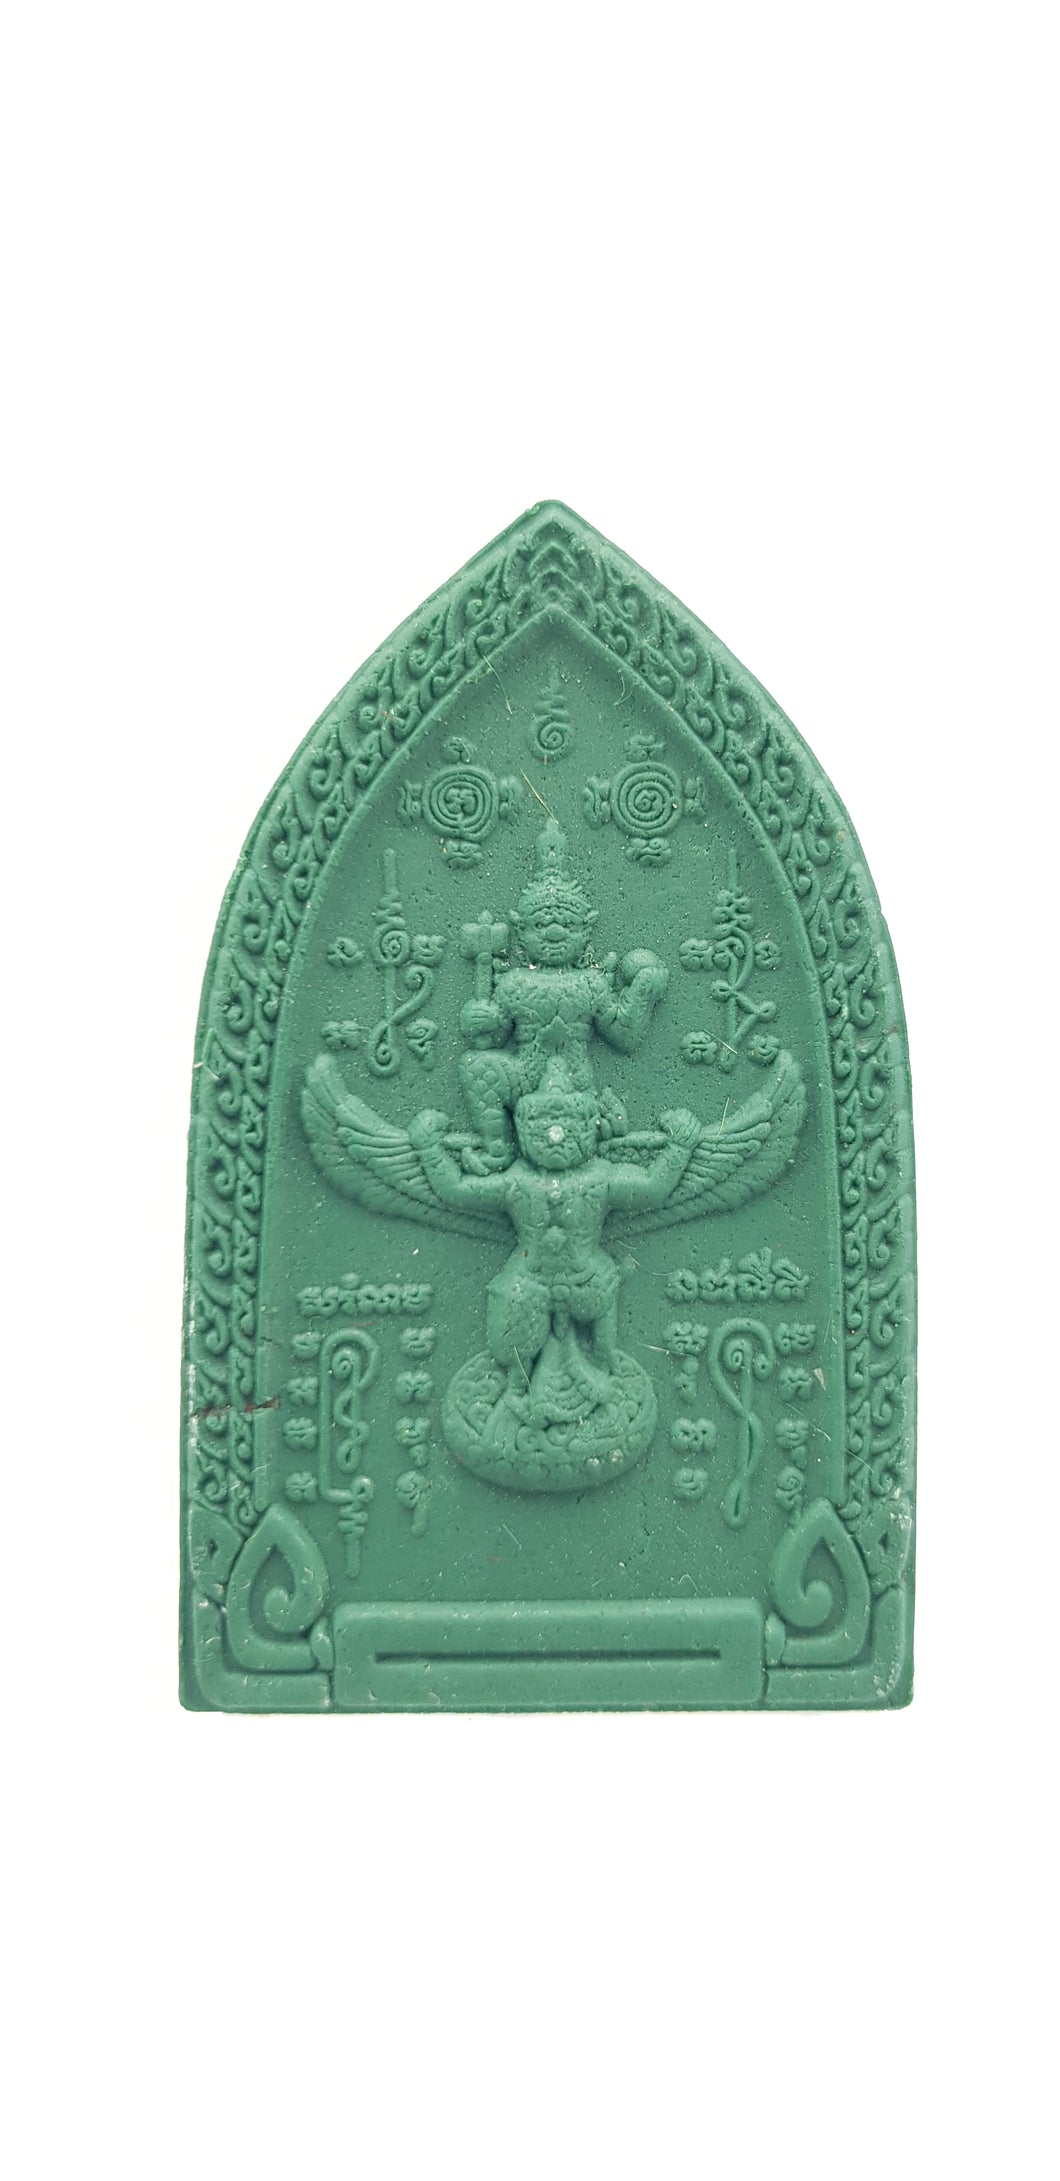 Thai amulets Thep Phra Asurintarahu Song Krut Joa Sap, Plick Duang Maha Sethtee. Nur pong arthan veth by Aj Korakot